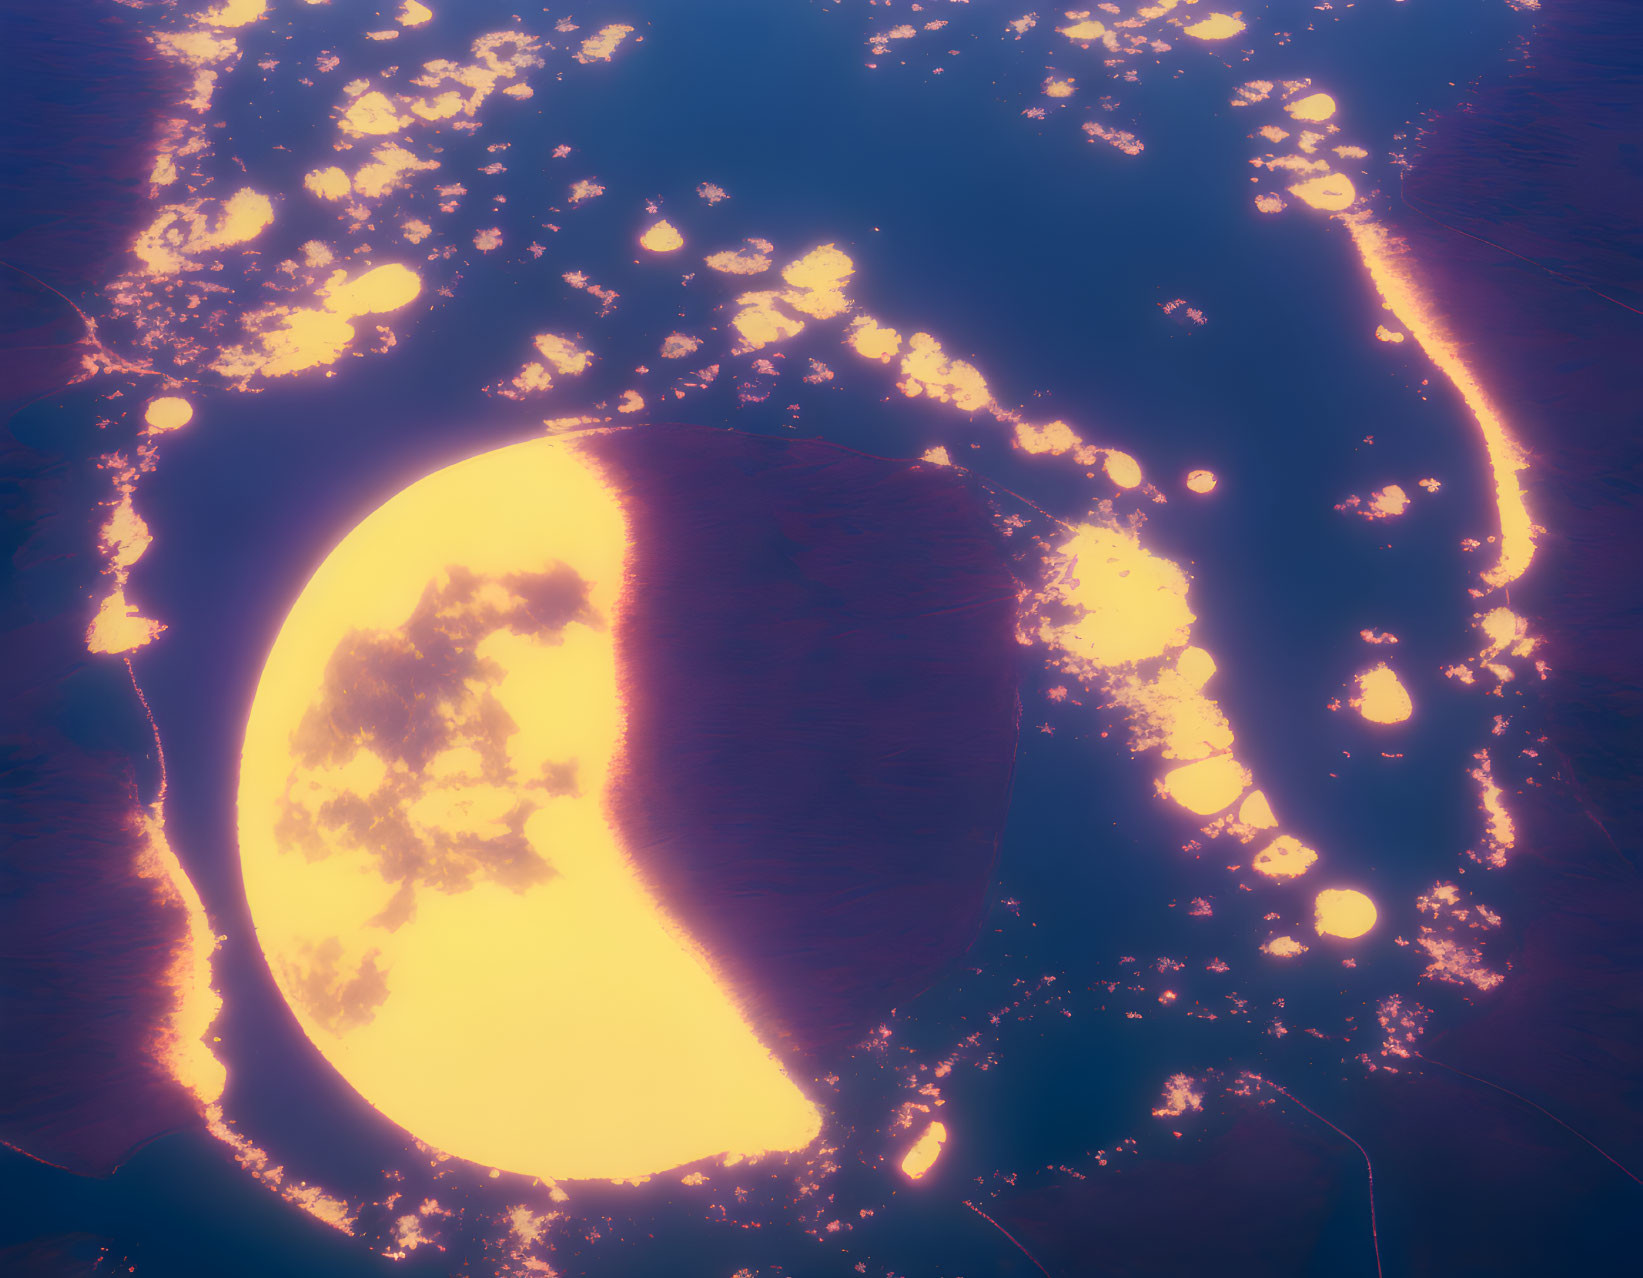 Surreal vibrant image of luminous circular body in dark textured landscape